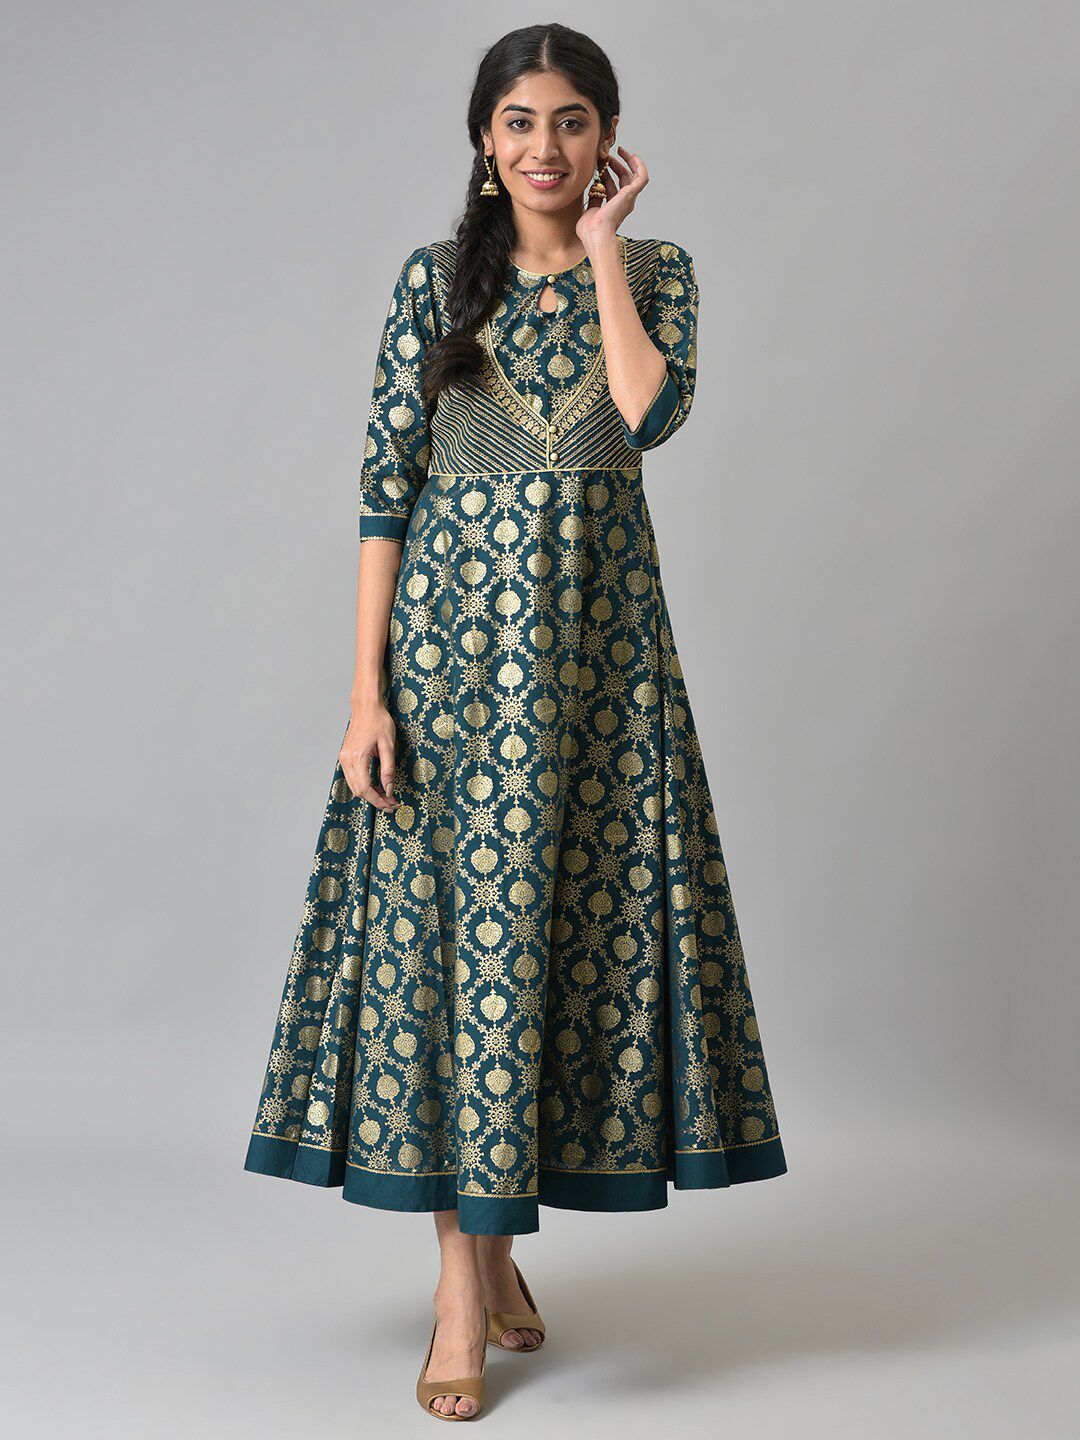 AURELIA Green Ethnic Motifs Cotton Maxi Dress Price in India